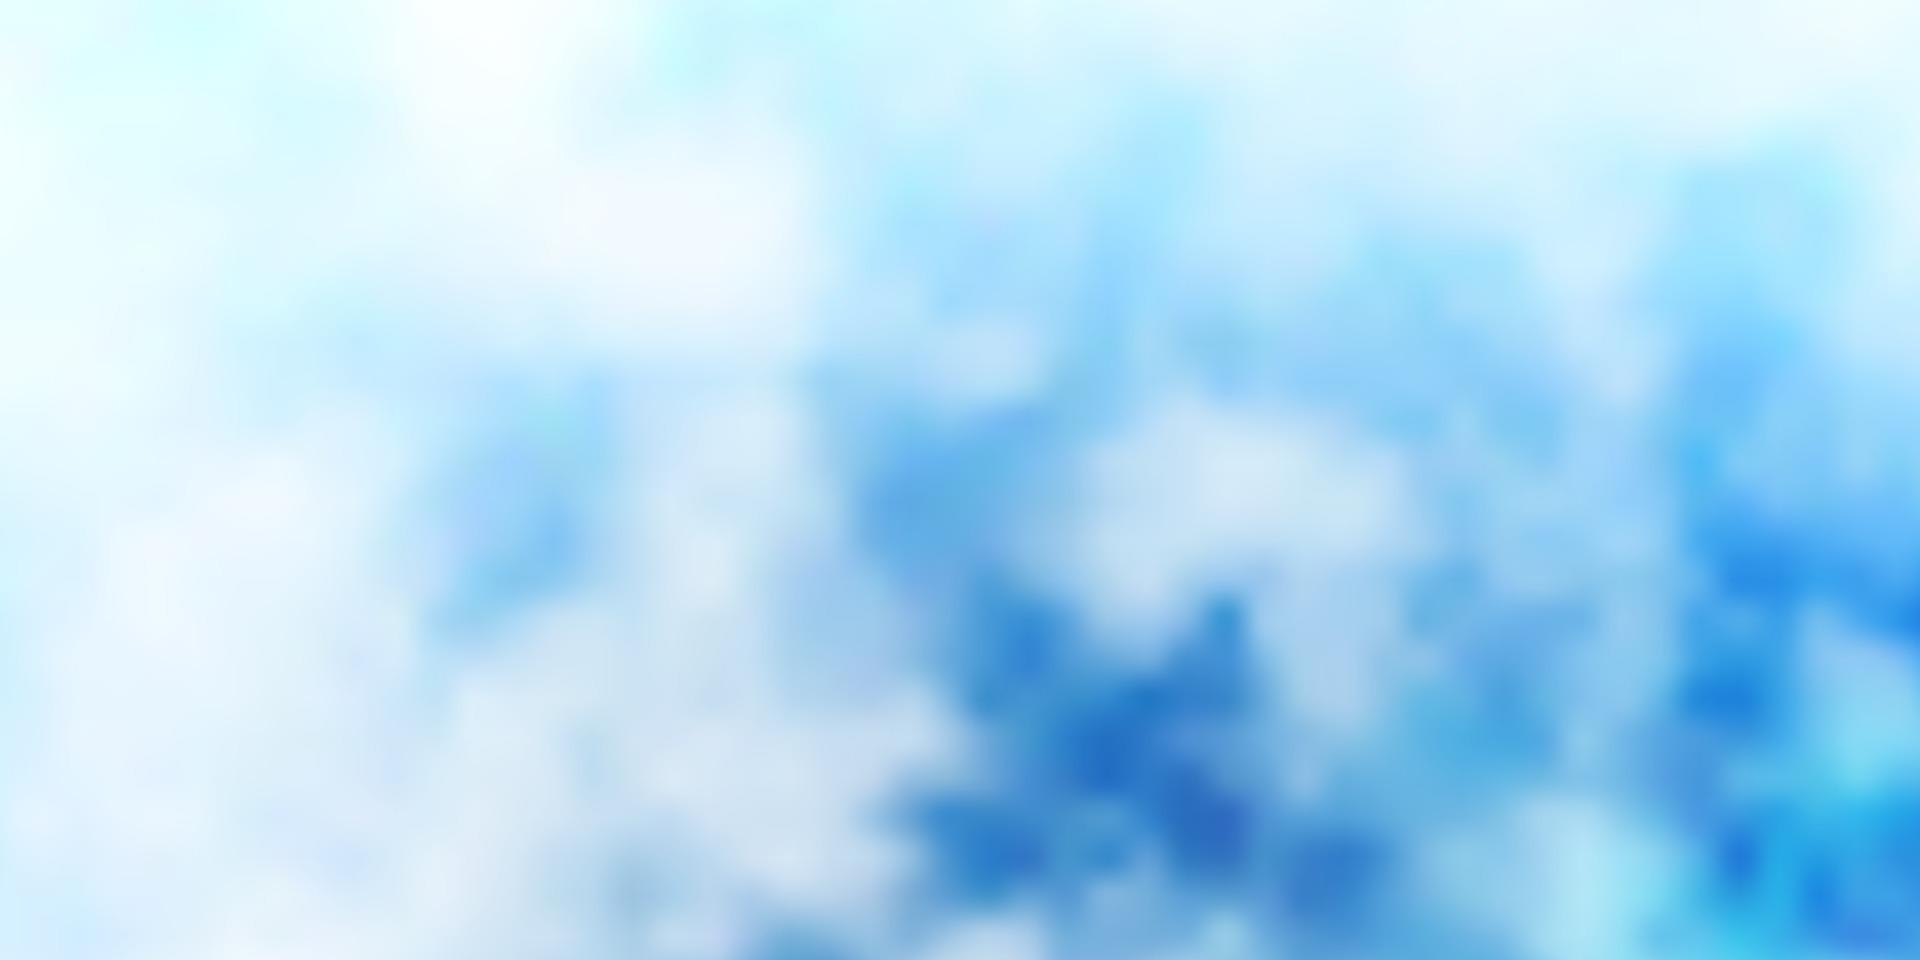 textura de vector azul claro con cielo nublado.